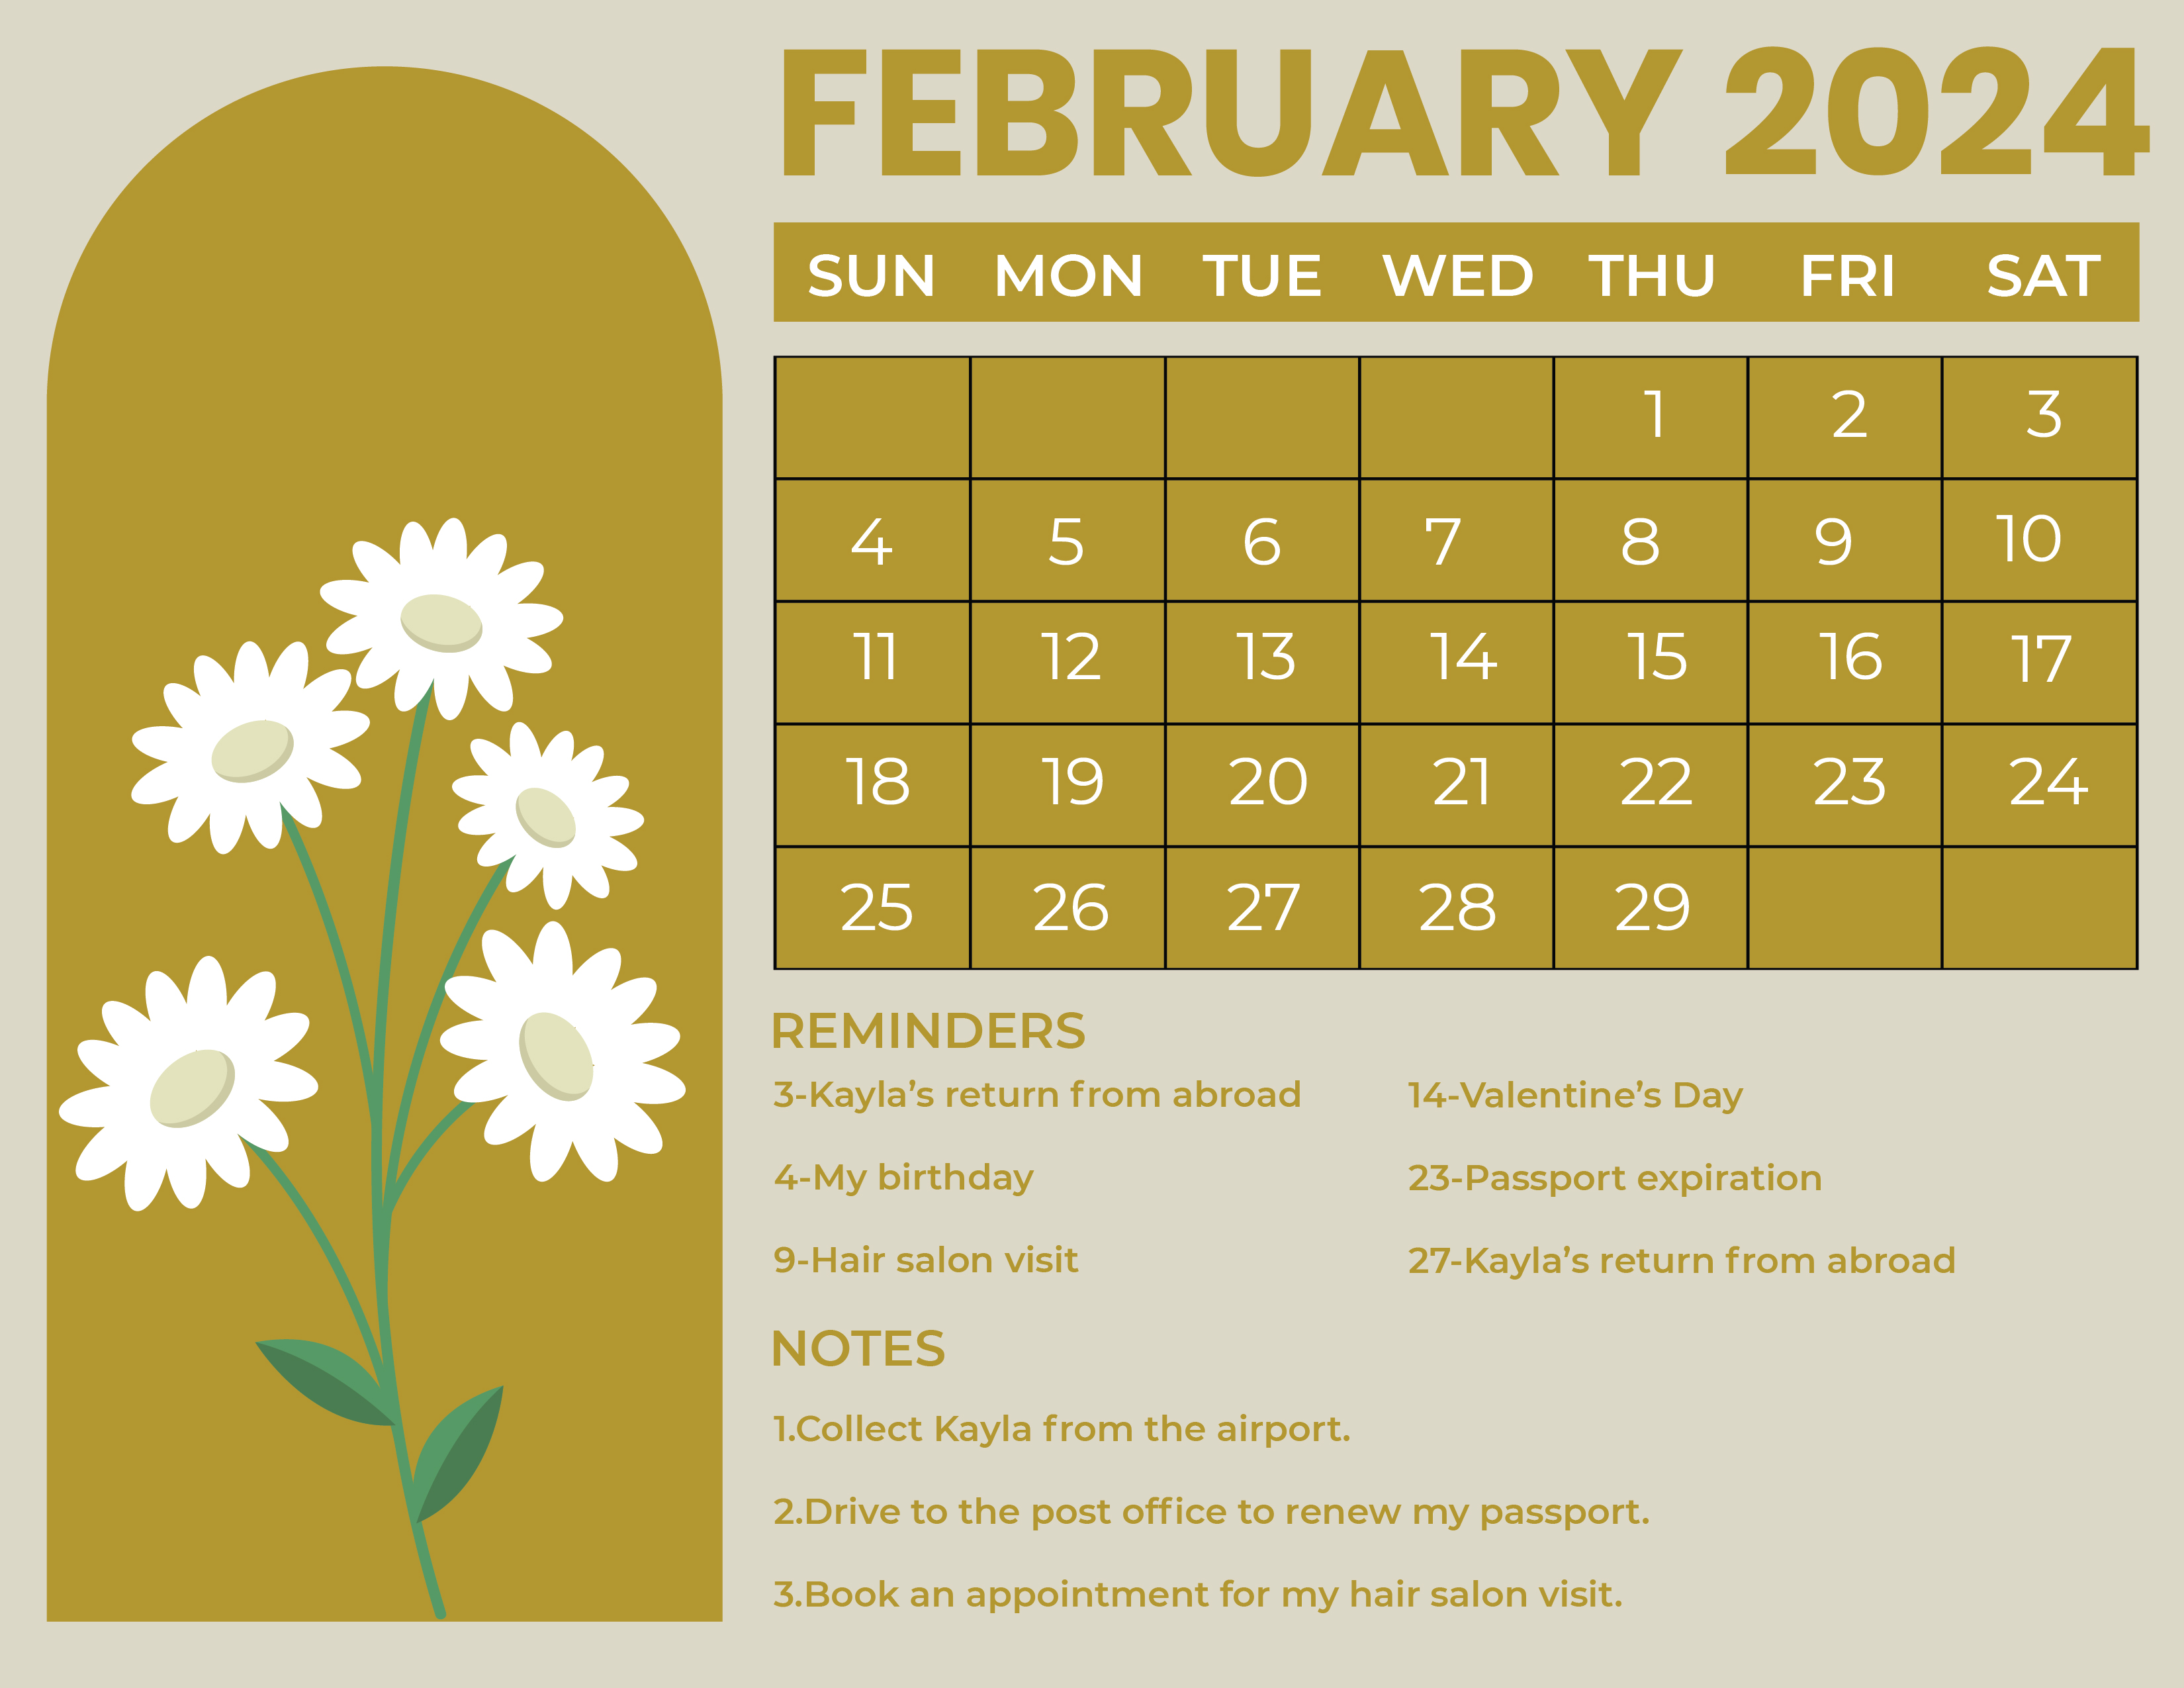 free-pretty-february-2023-calendar-download-in-word-illustrator-psd